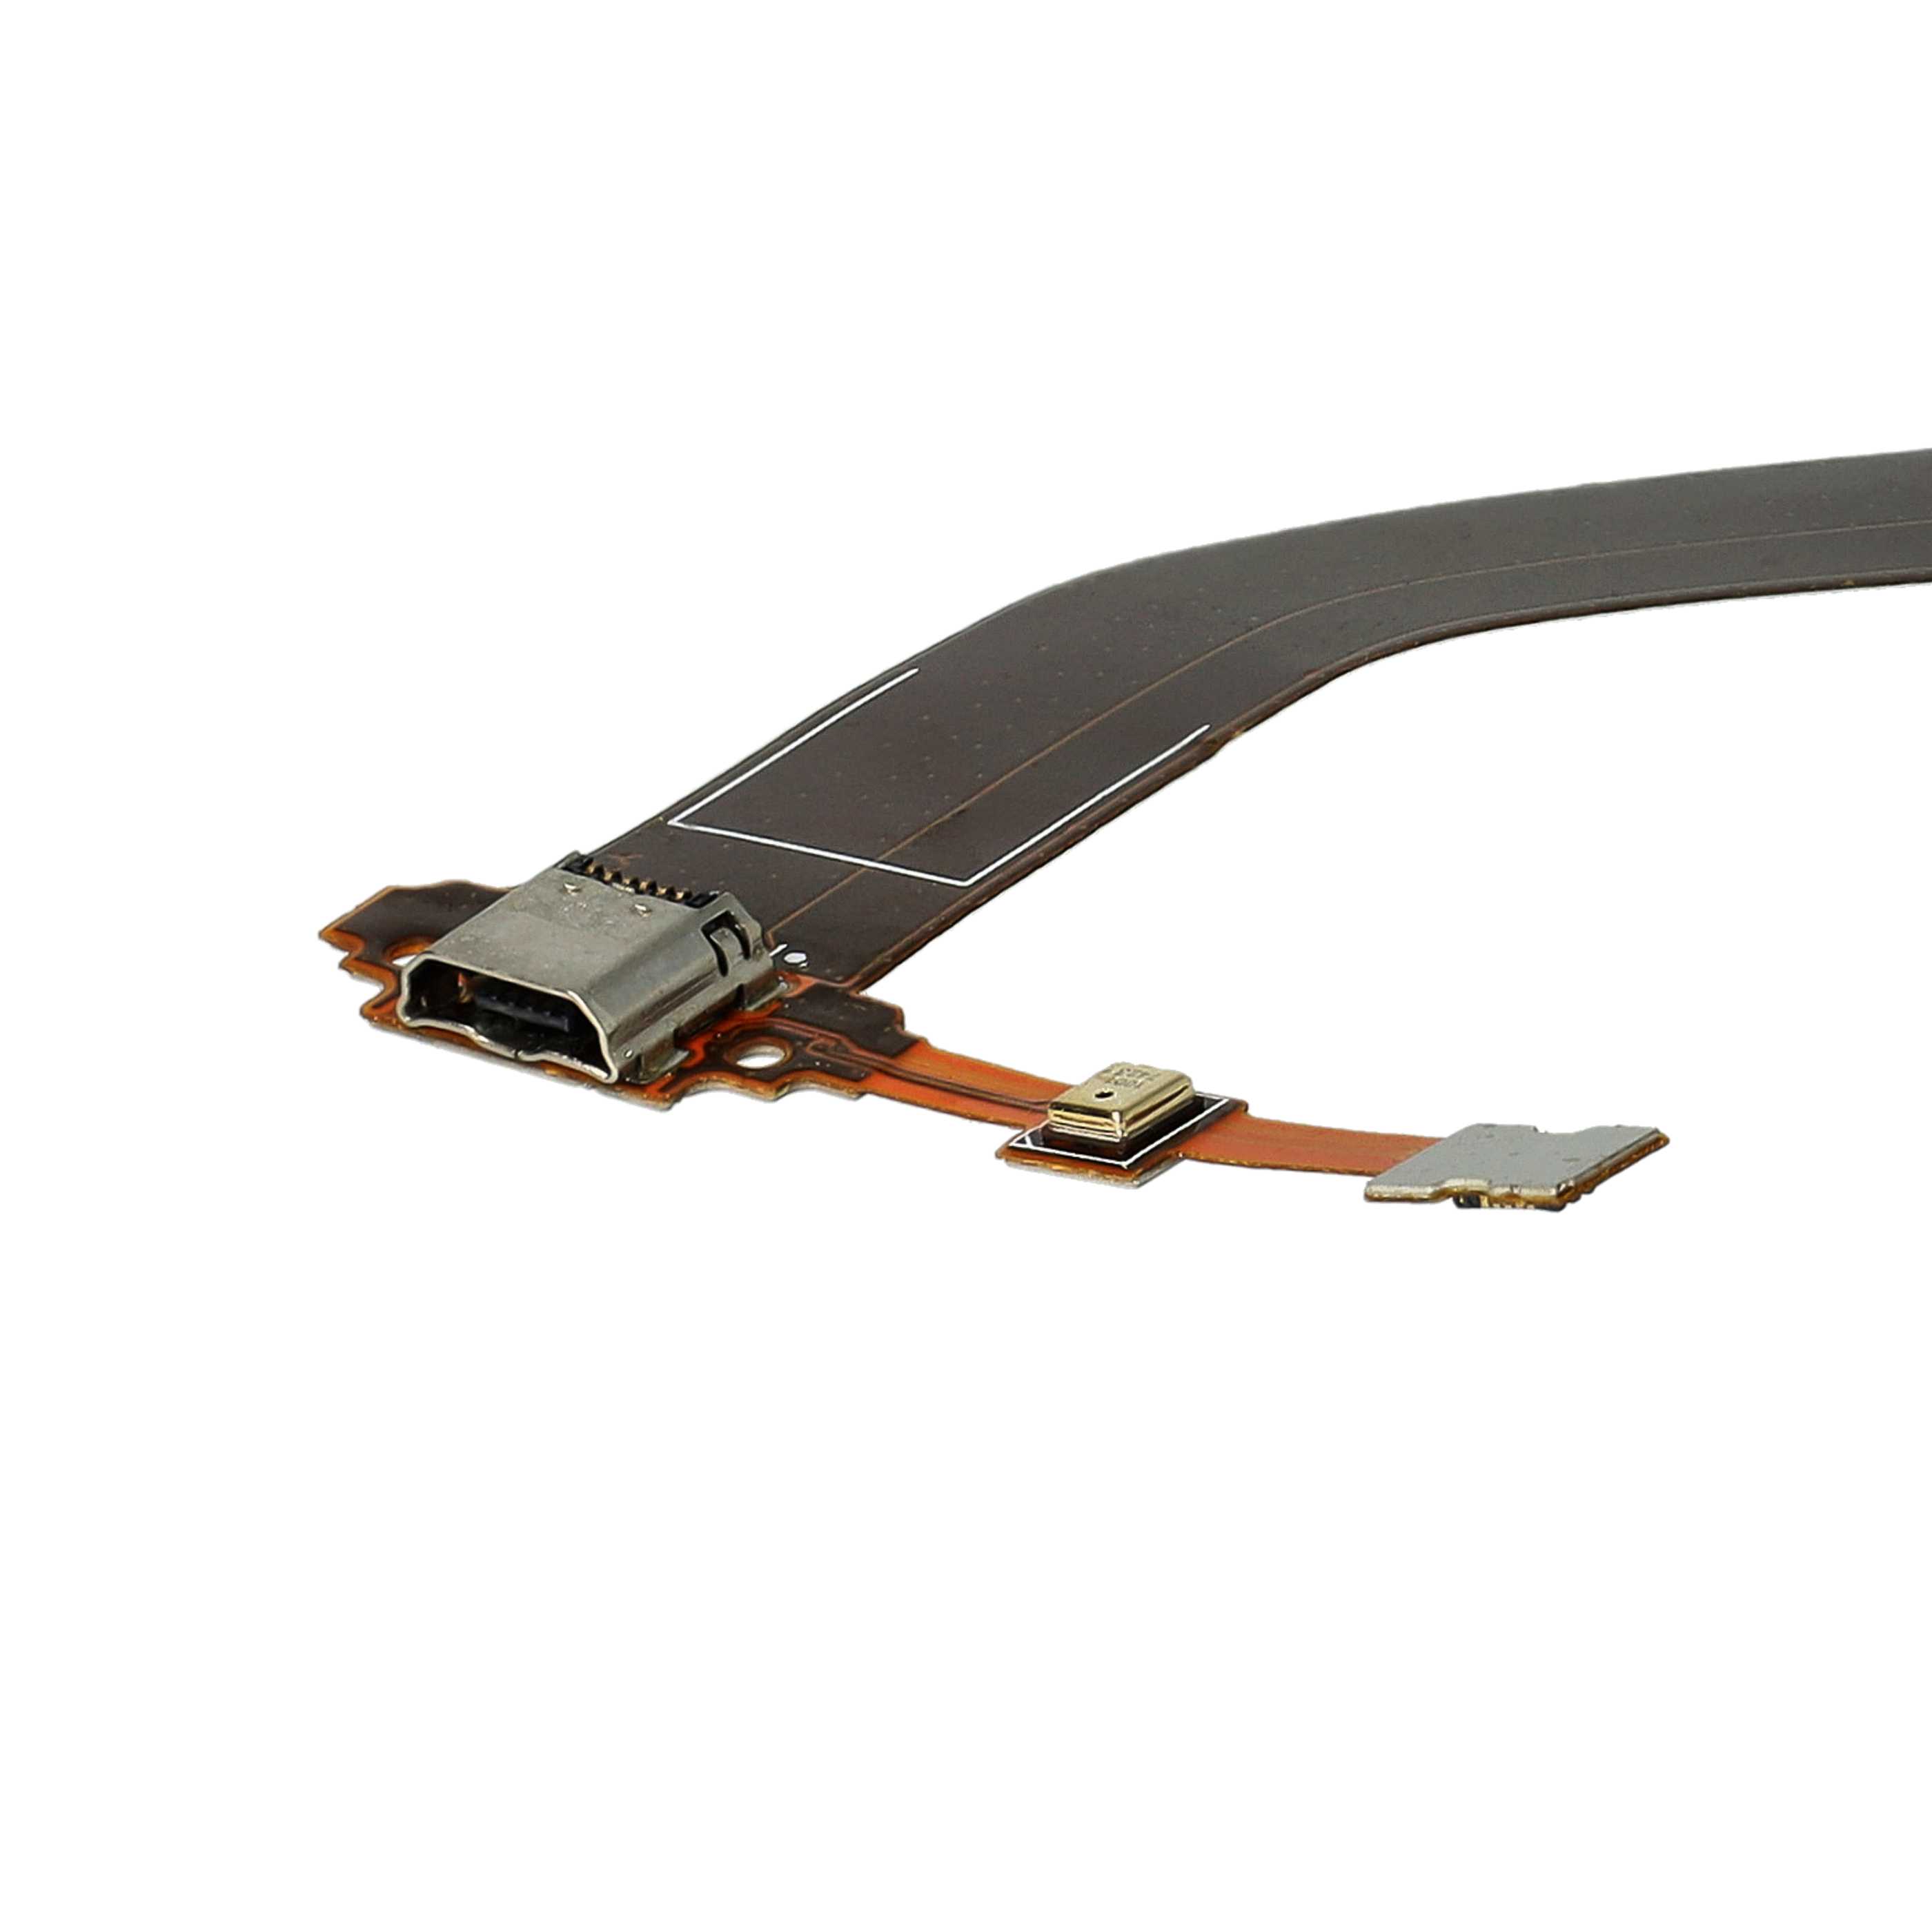 Clavija de carga micro USB para tablet Samsung Galaxy Tab 3 10.1 GT-P5200, GT-P5201, GT-P5210, GT-P5220